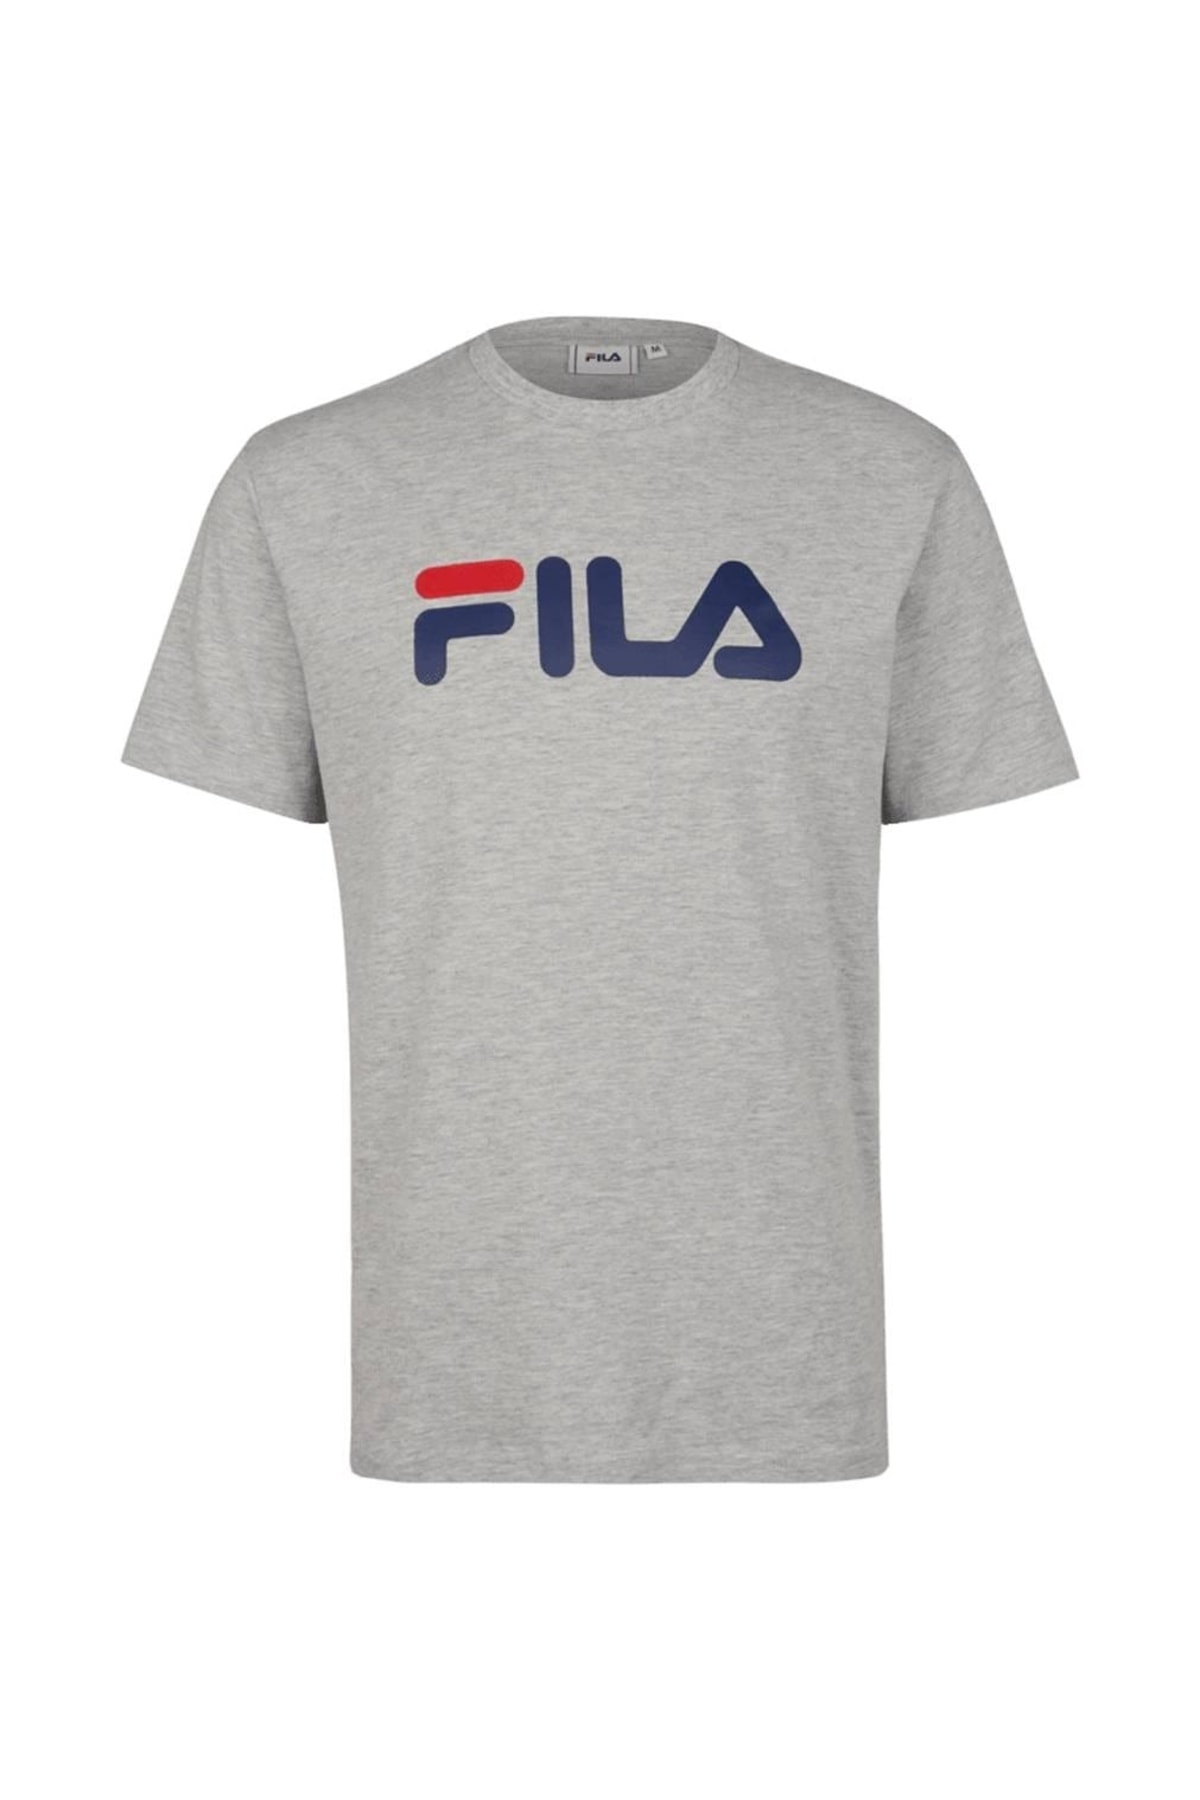 FILA T-Shirt Grau Regular Fit Fast ausverkauft